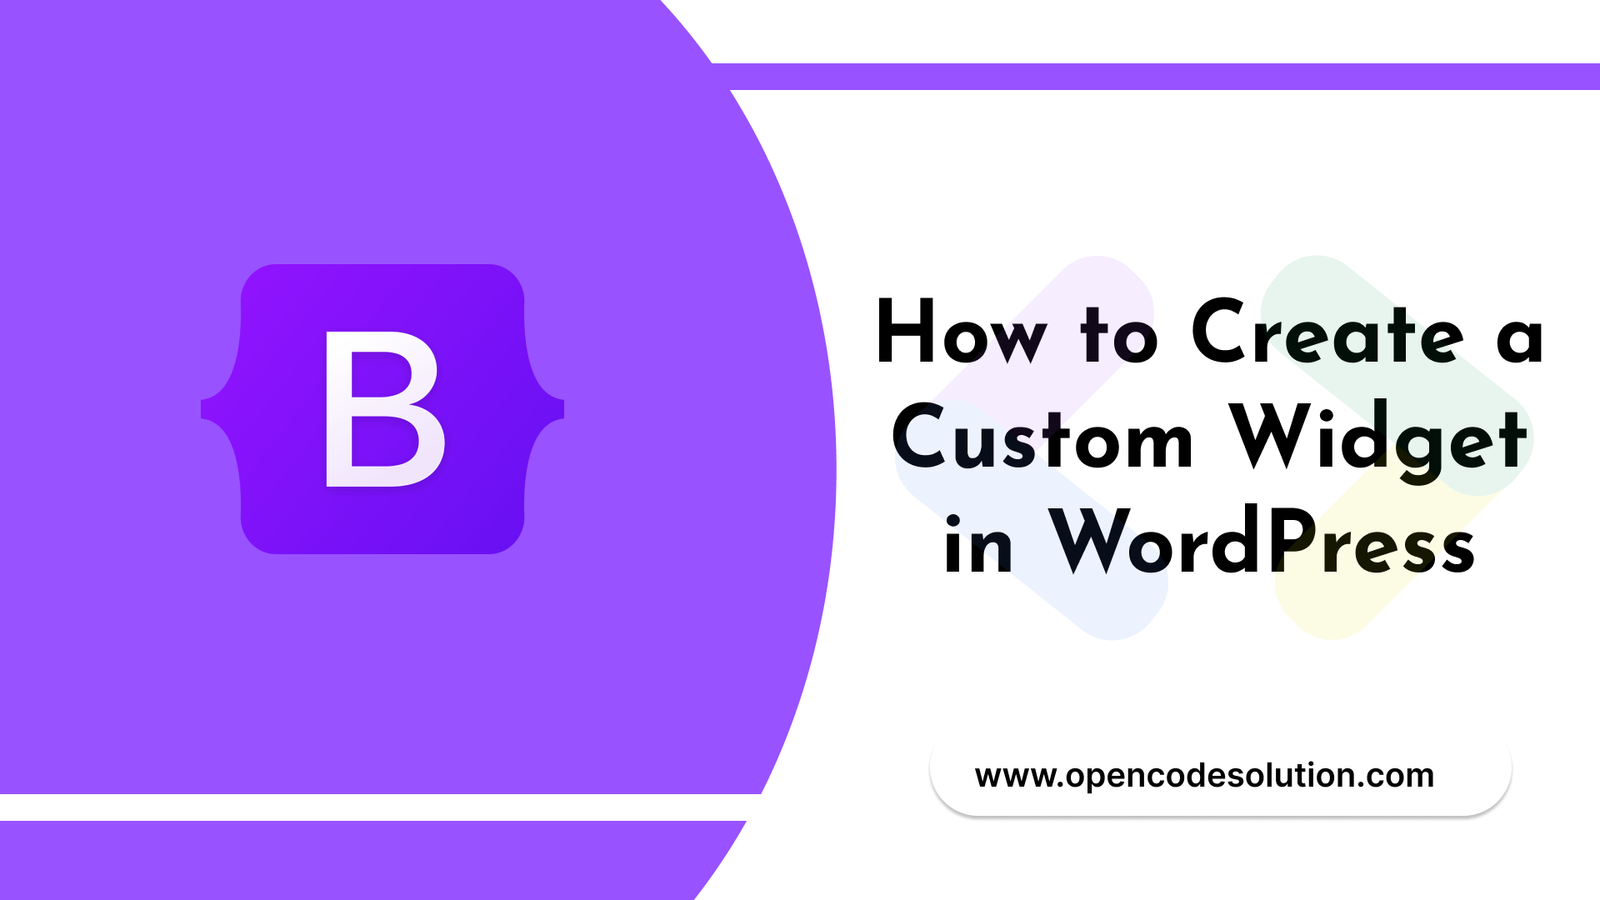 How to Create a Custom Widget in WordPress